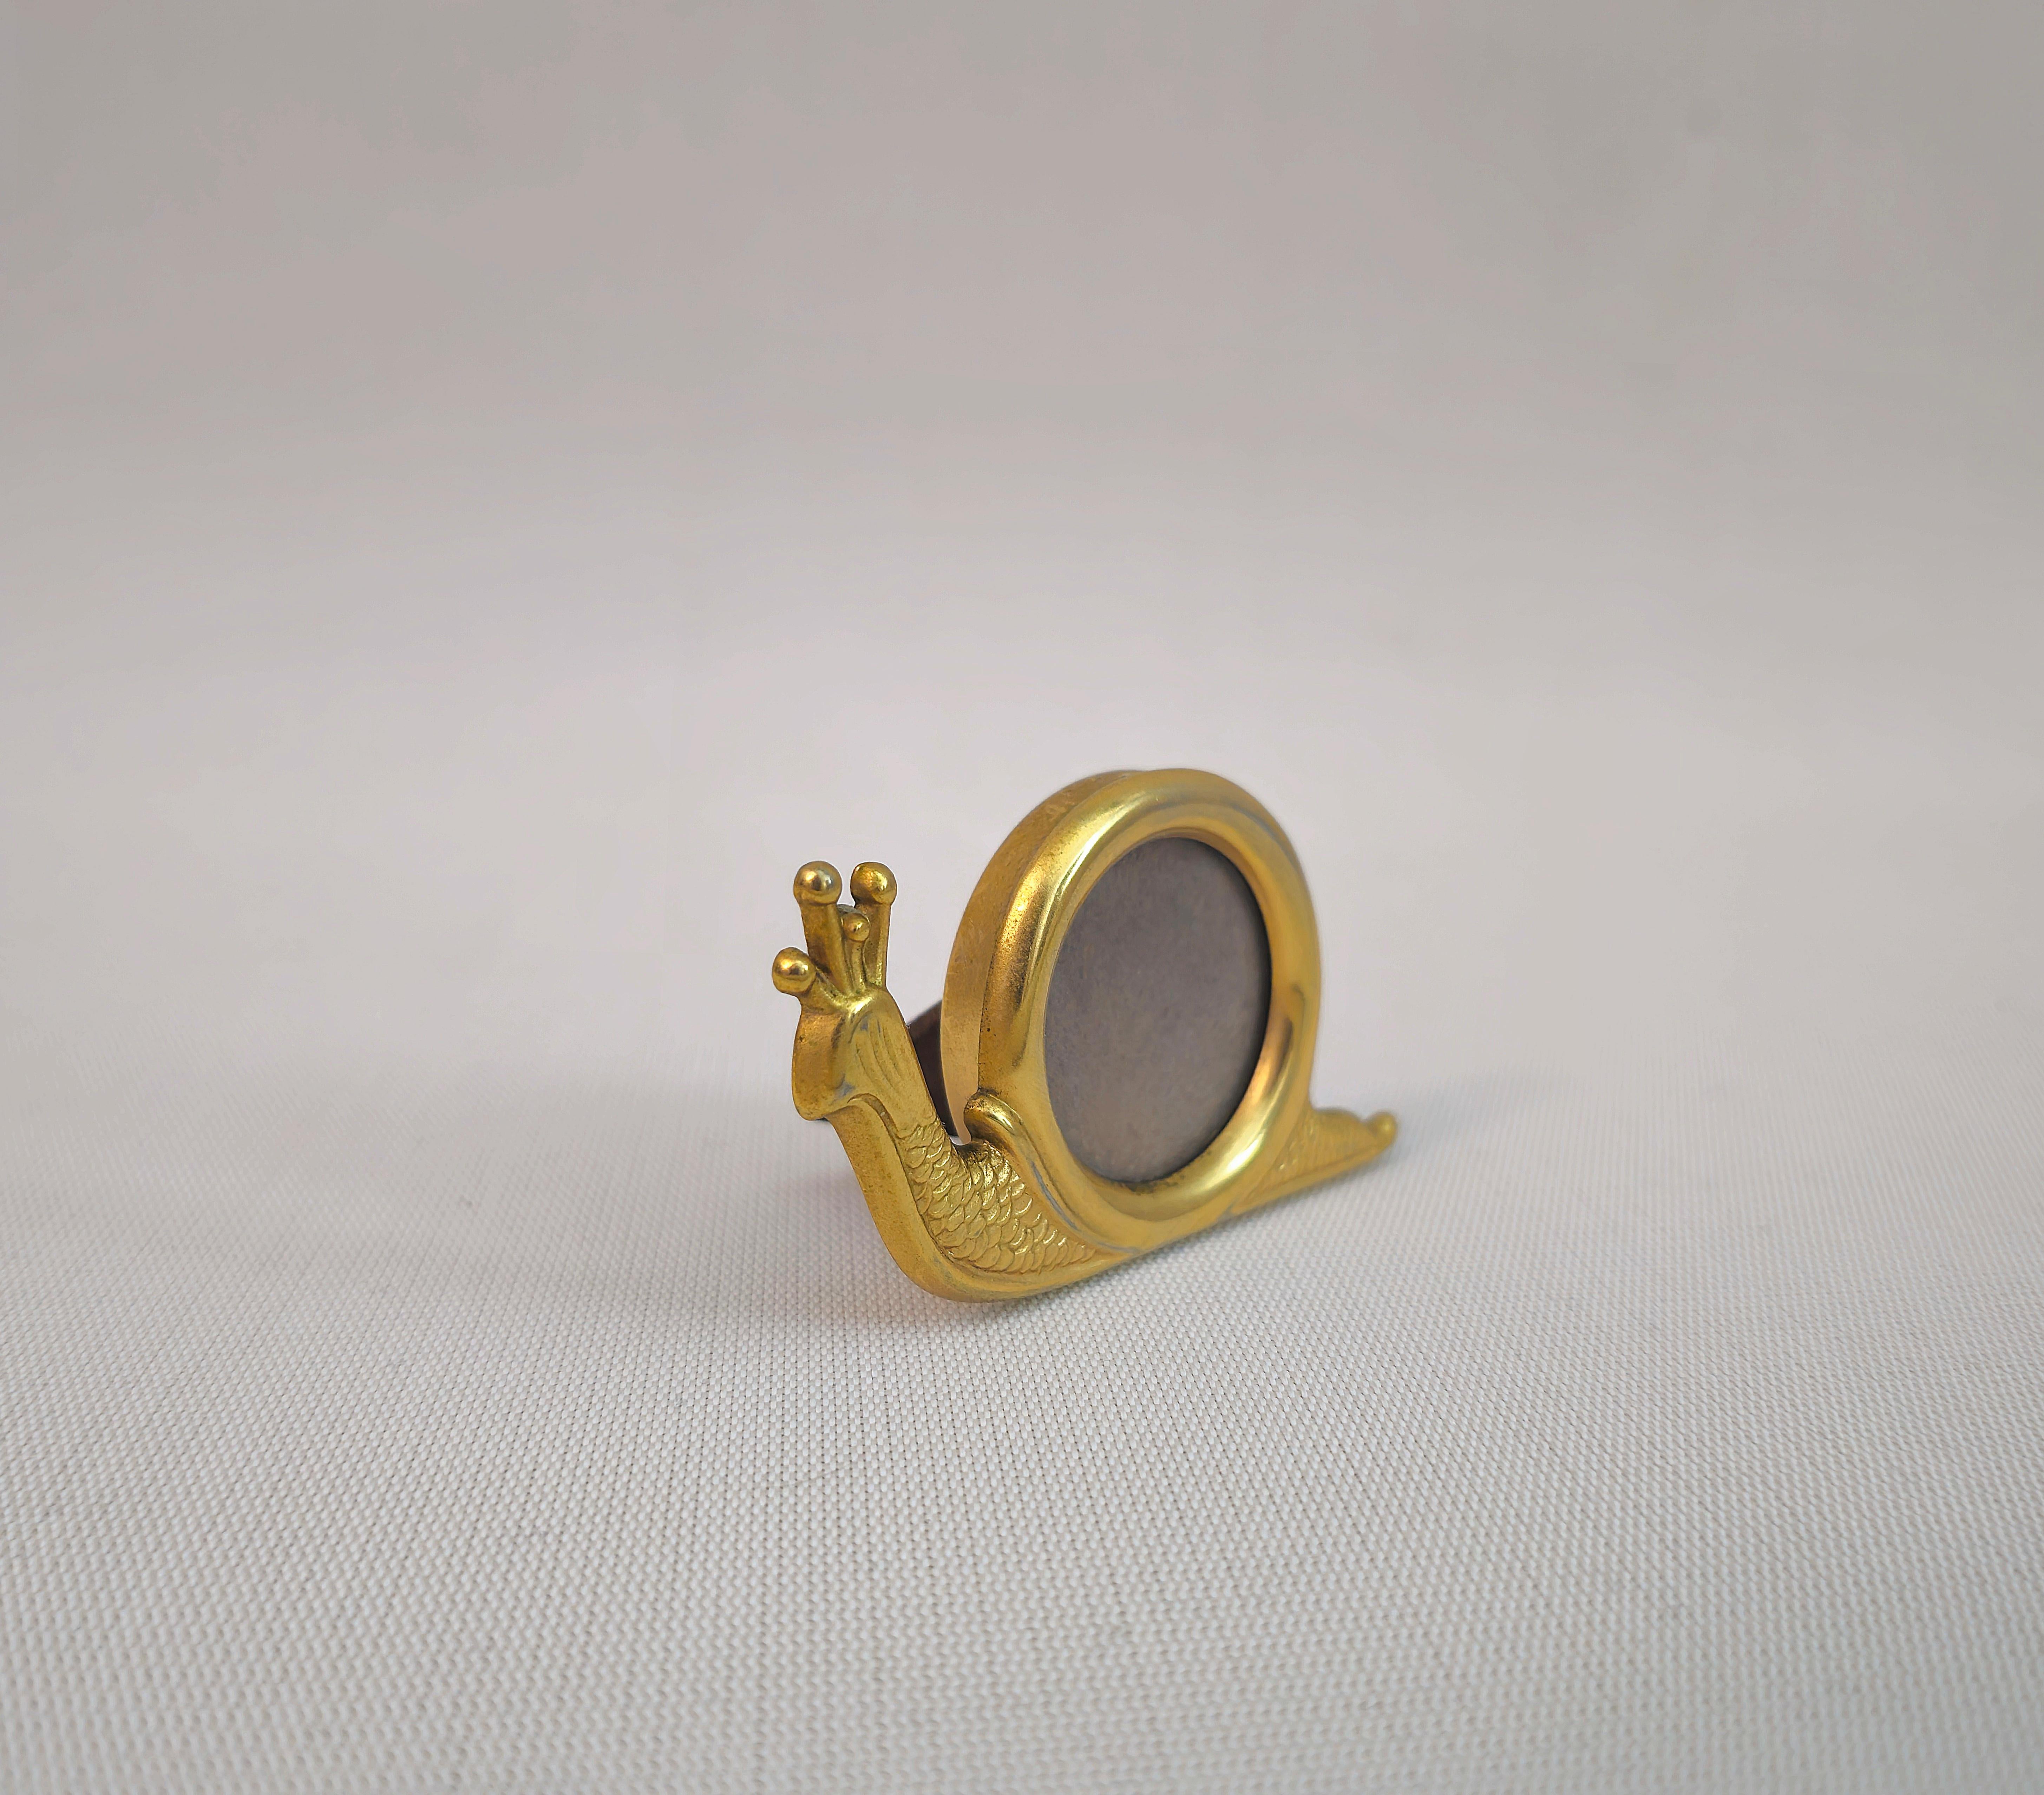 20th Century Decorative Object Picture Frame Gold Brass Midcentury Modern Italian Design 1960